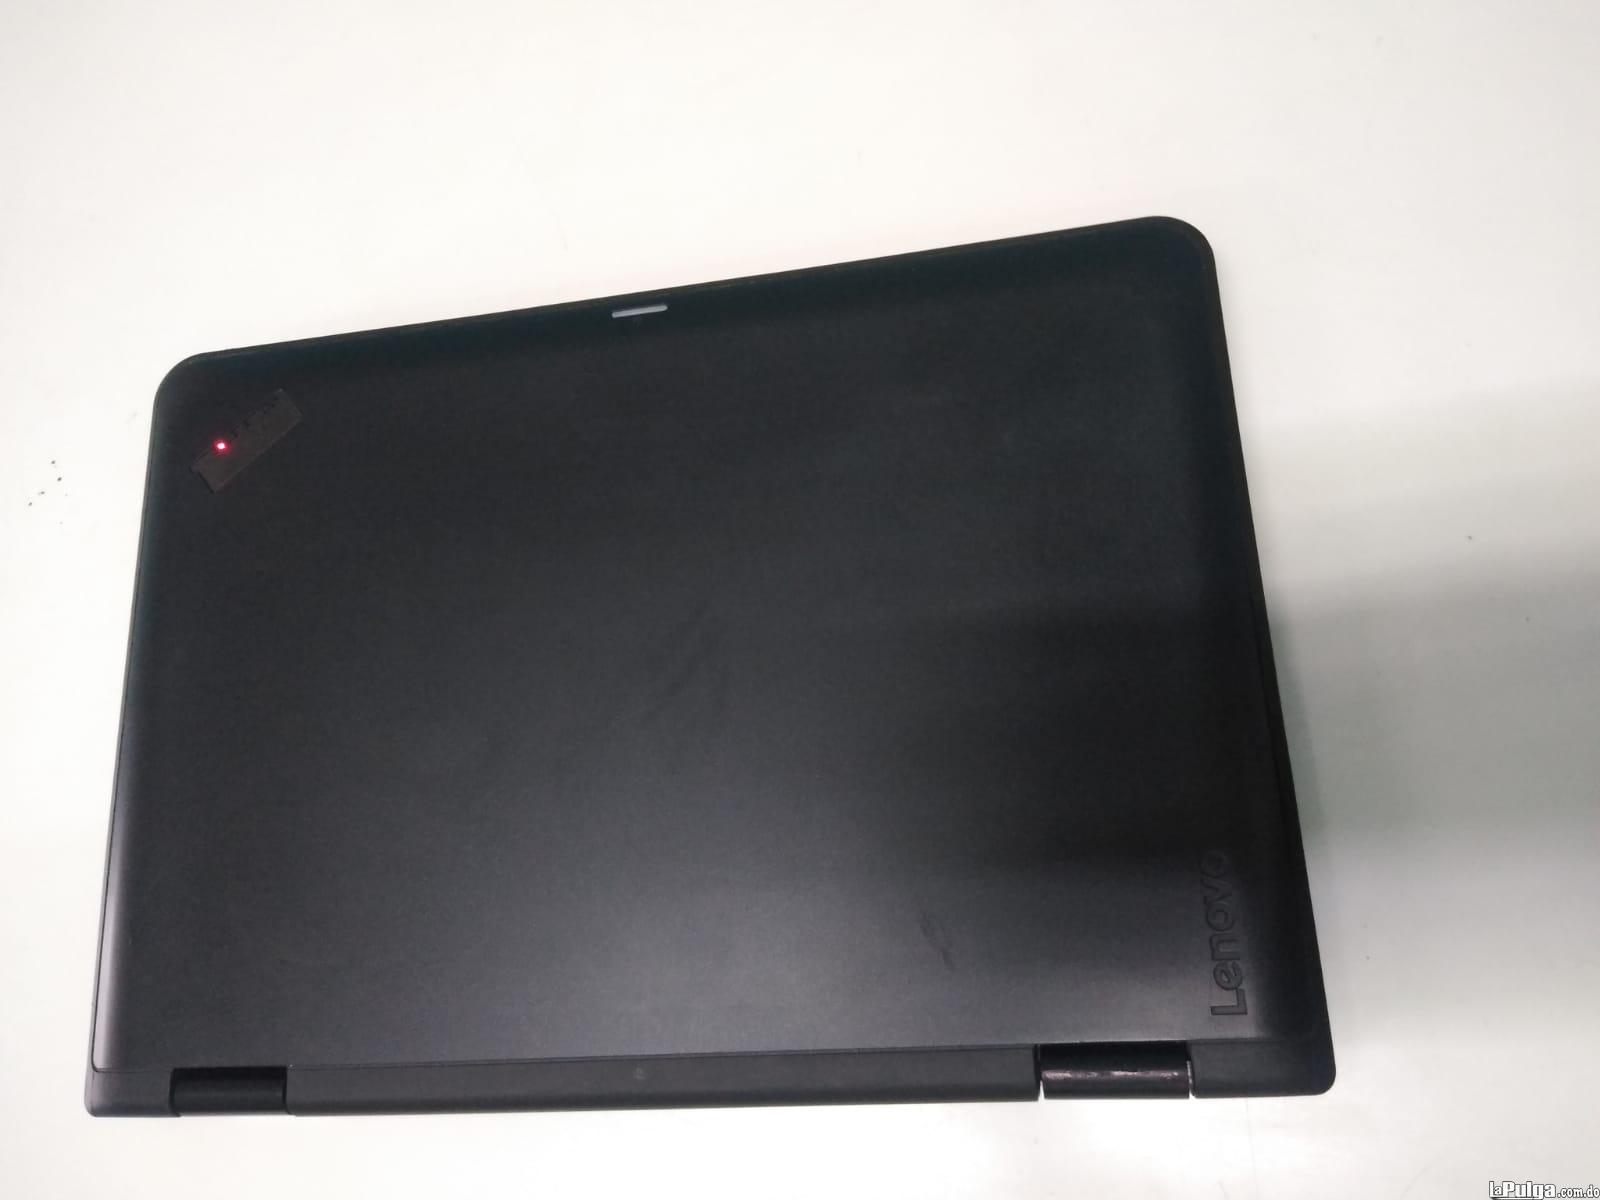 Laptop Lenovo Yoga 11e touch / 6th Gen Intel Celeron 3150 / 4GB DD Foto 7148365-2.jpg